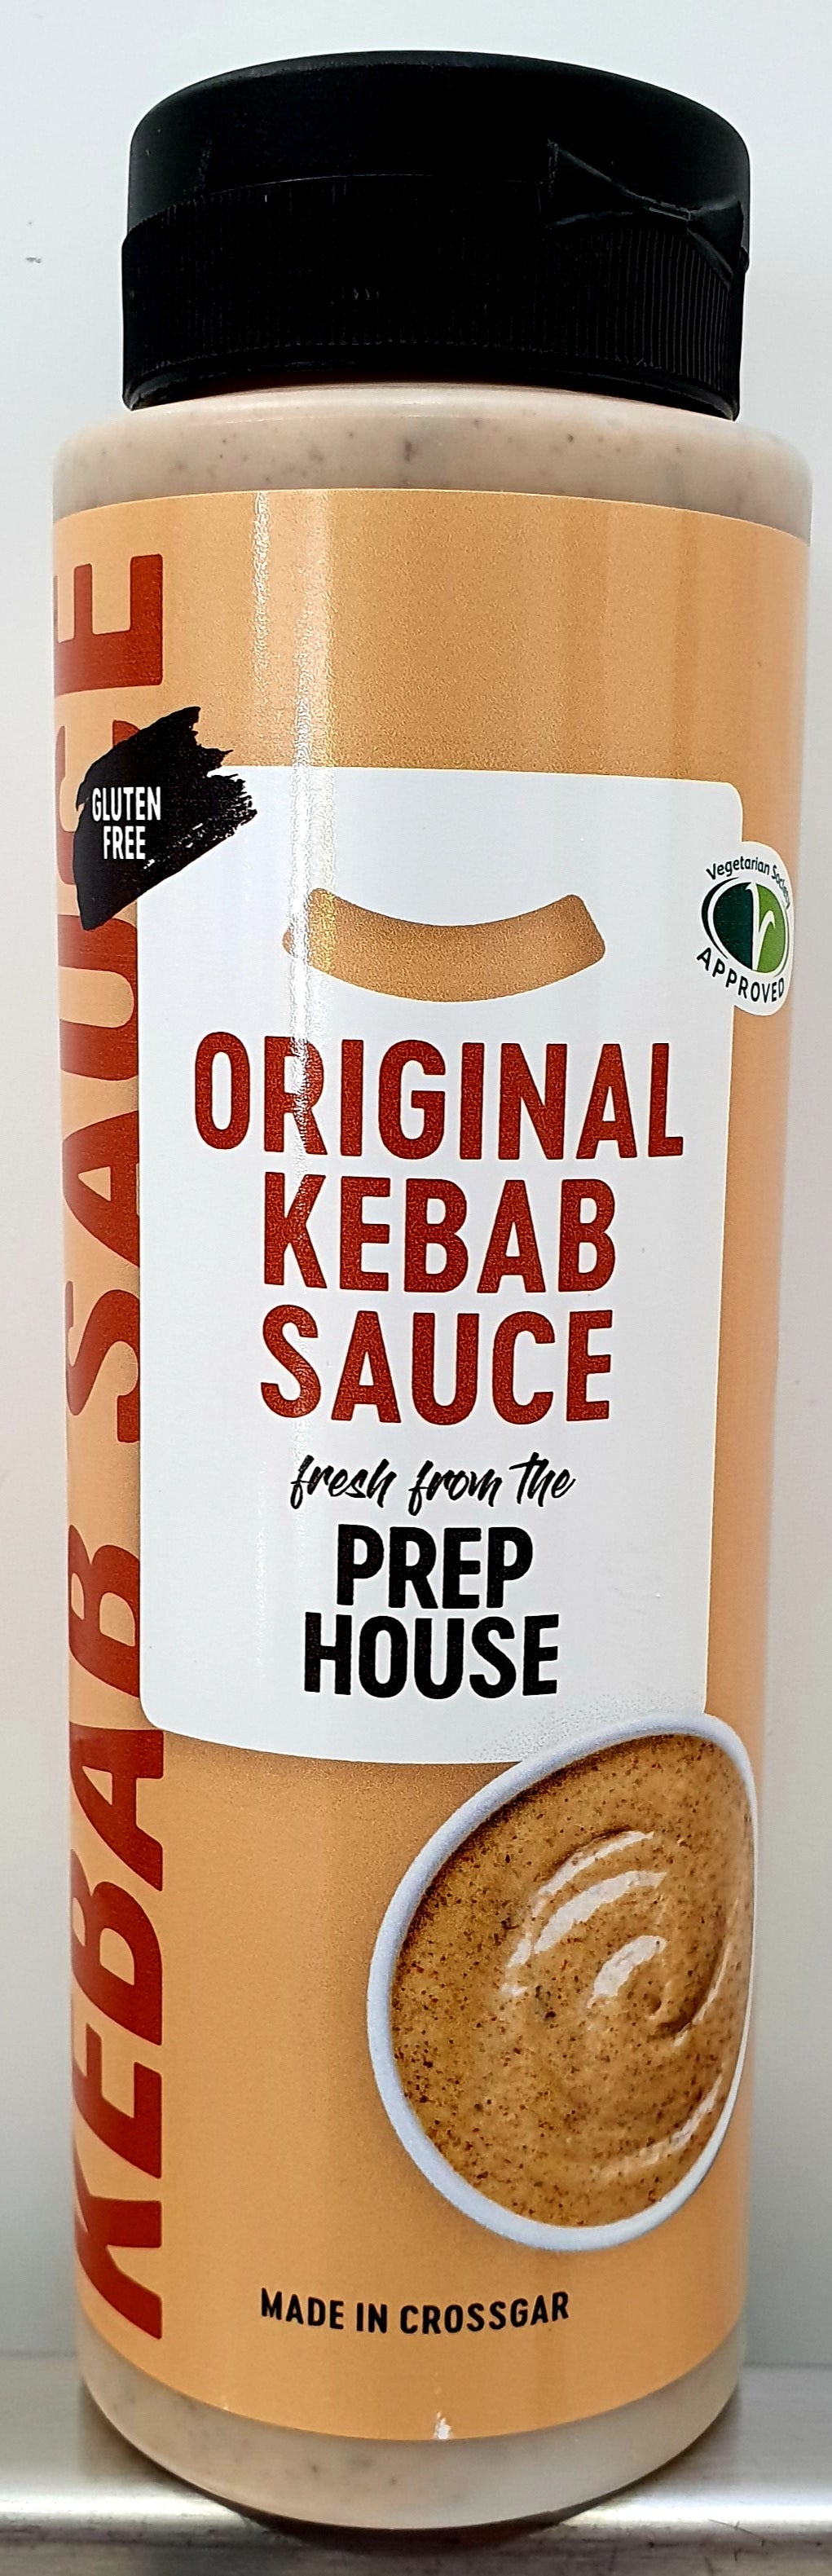 Prep House Original Kebab Sauce